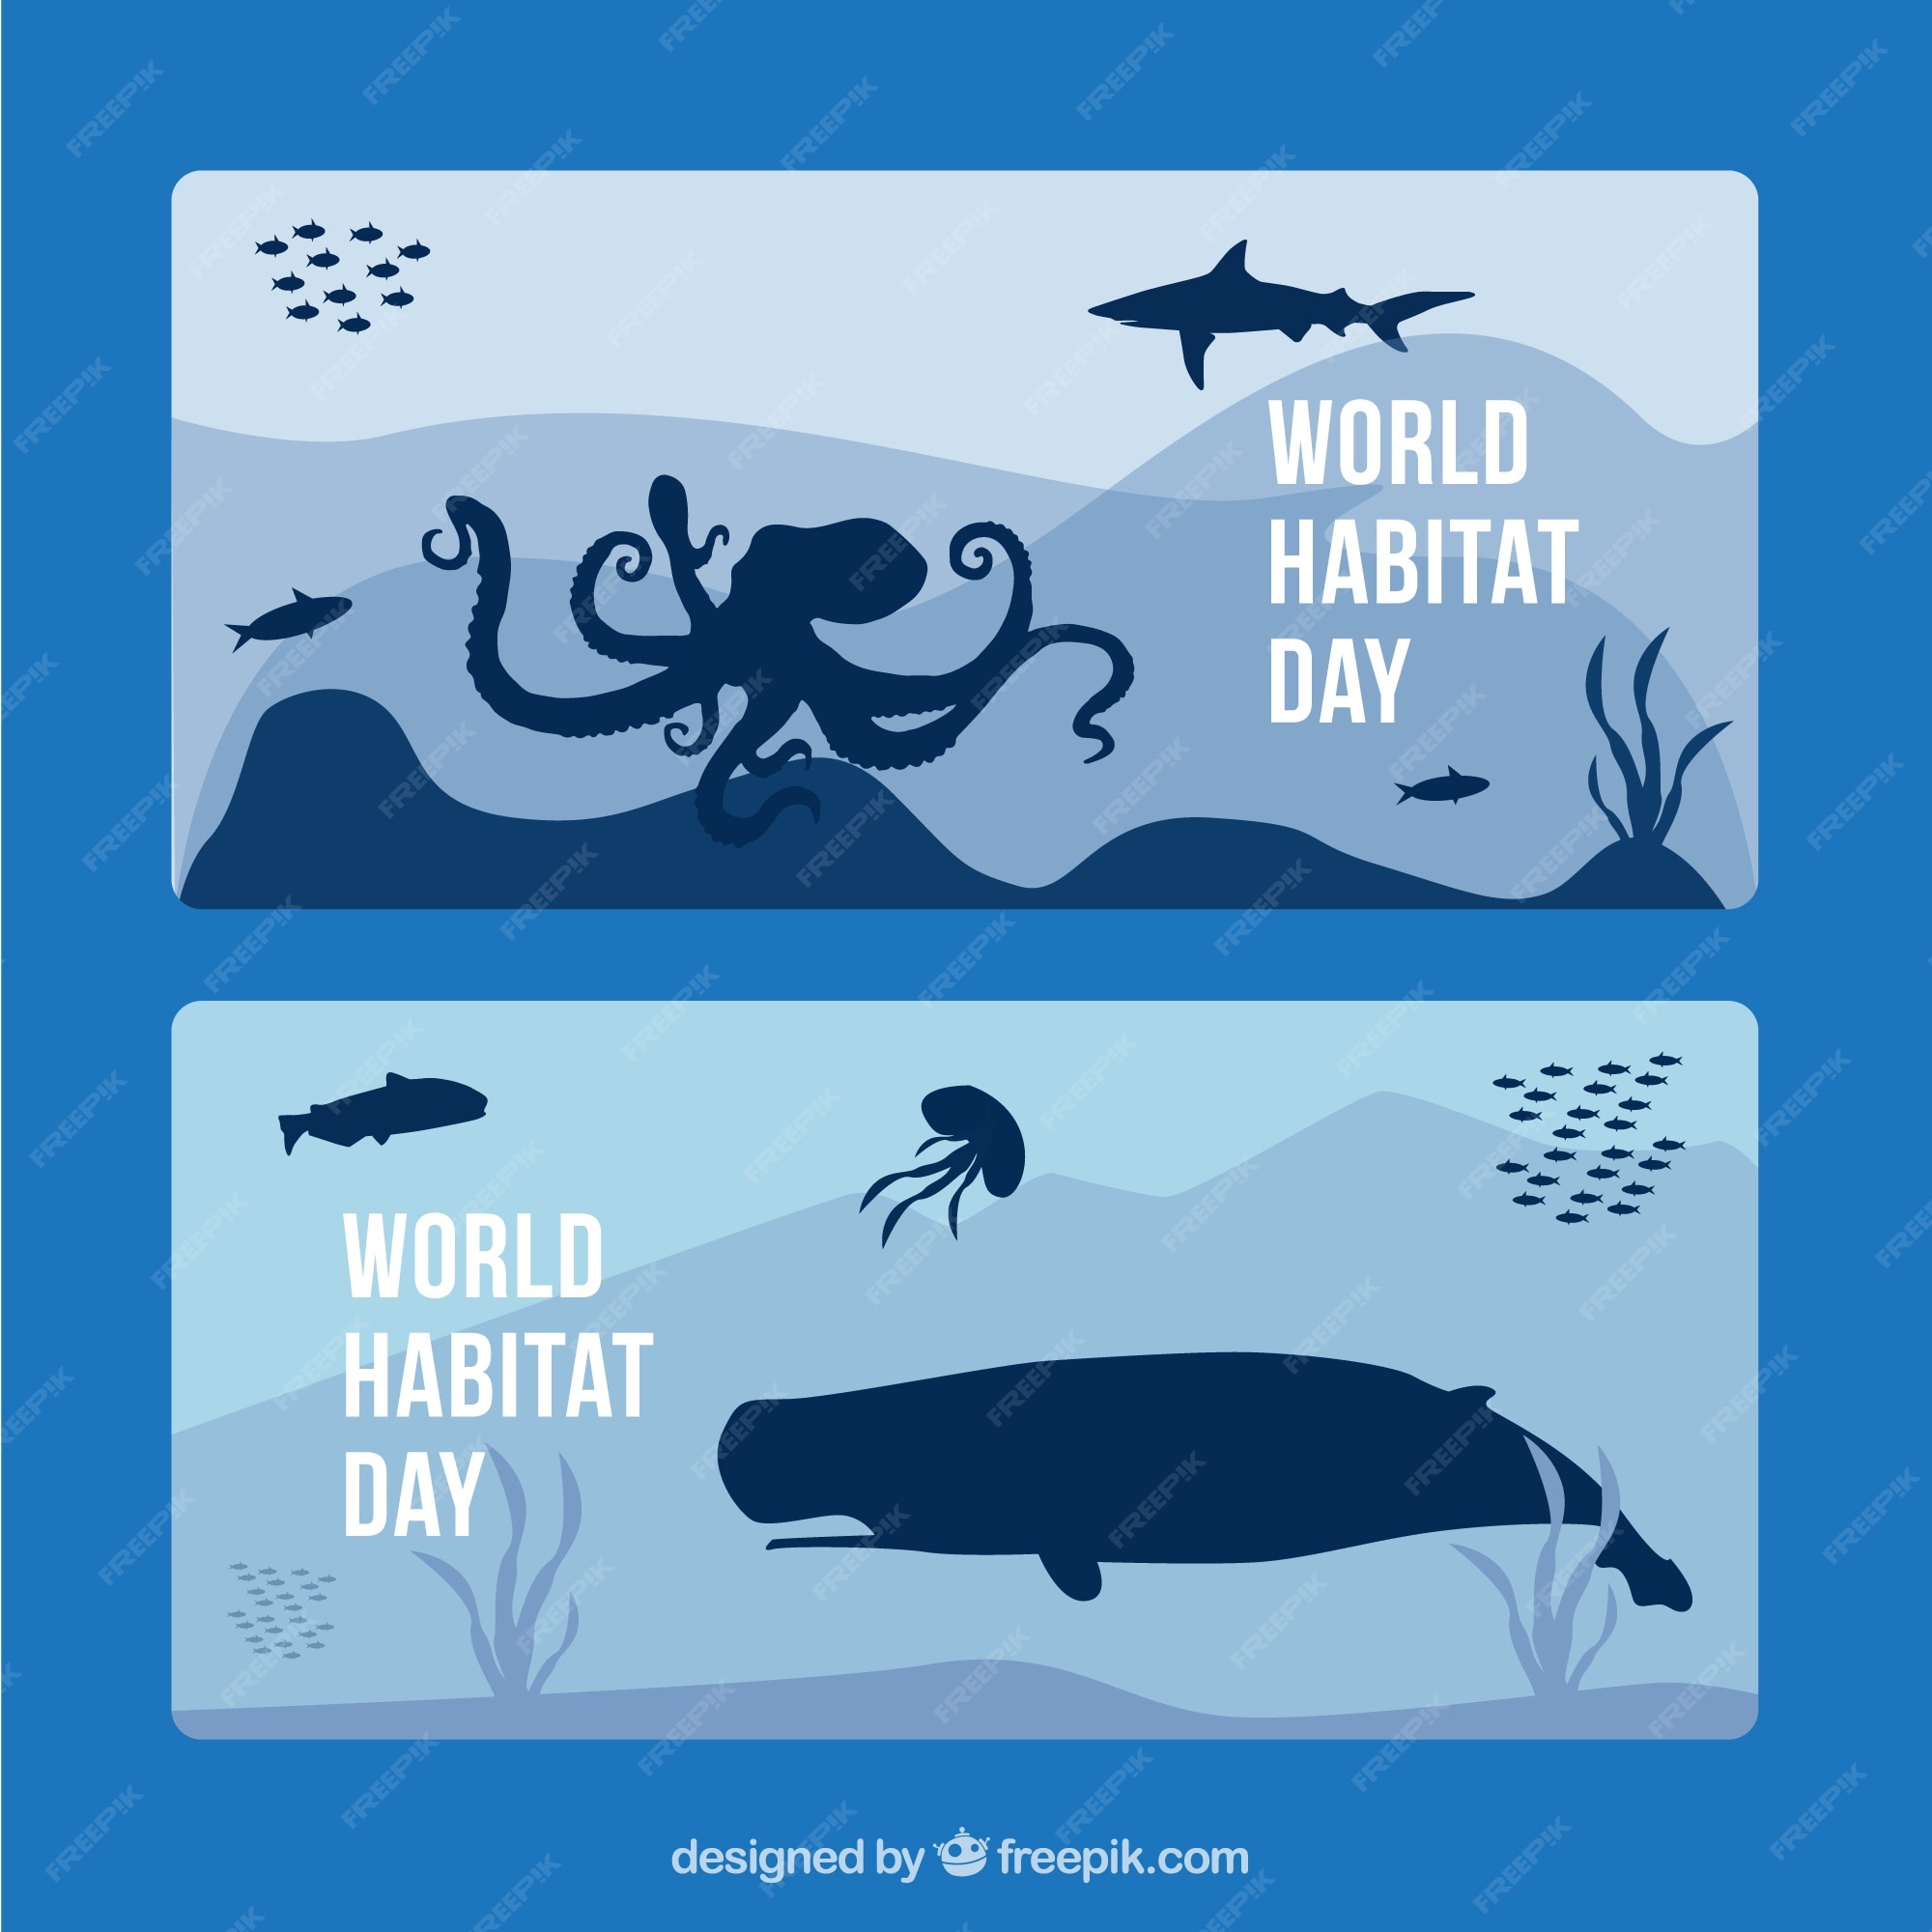 Free Vector | World habitat day banners of marine animals